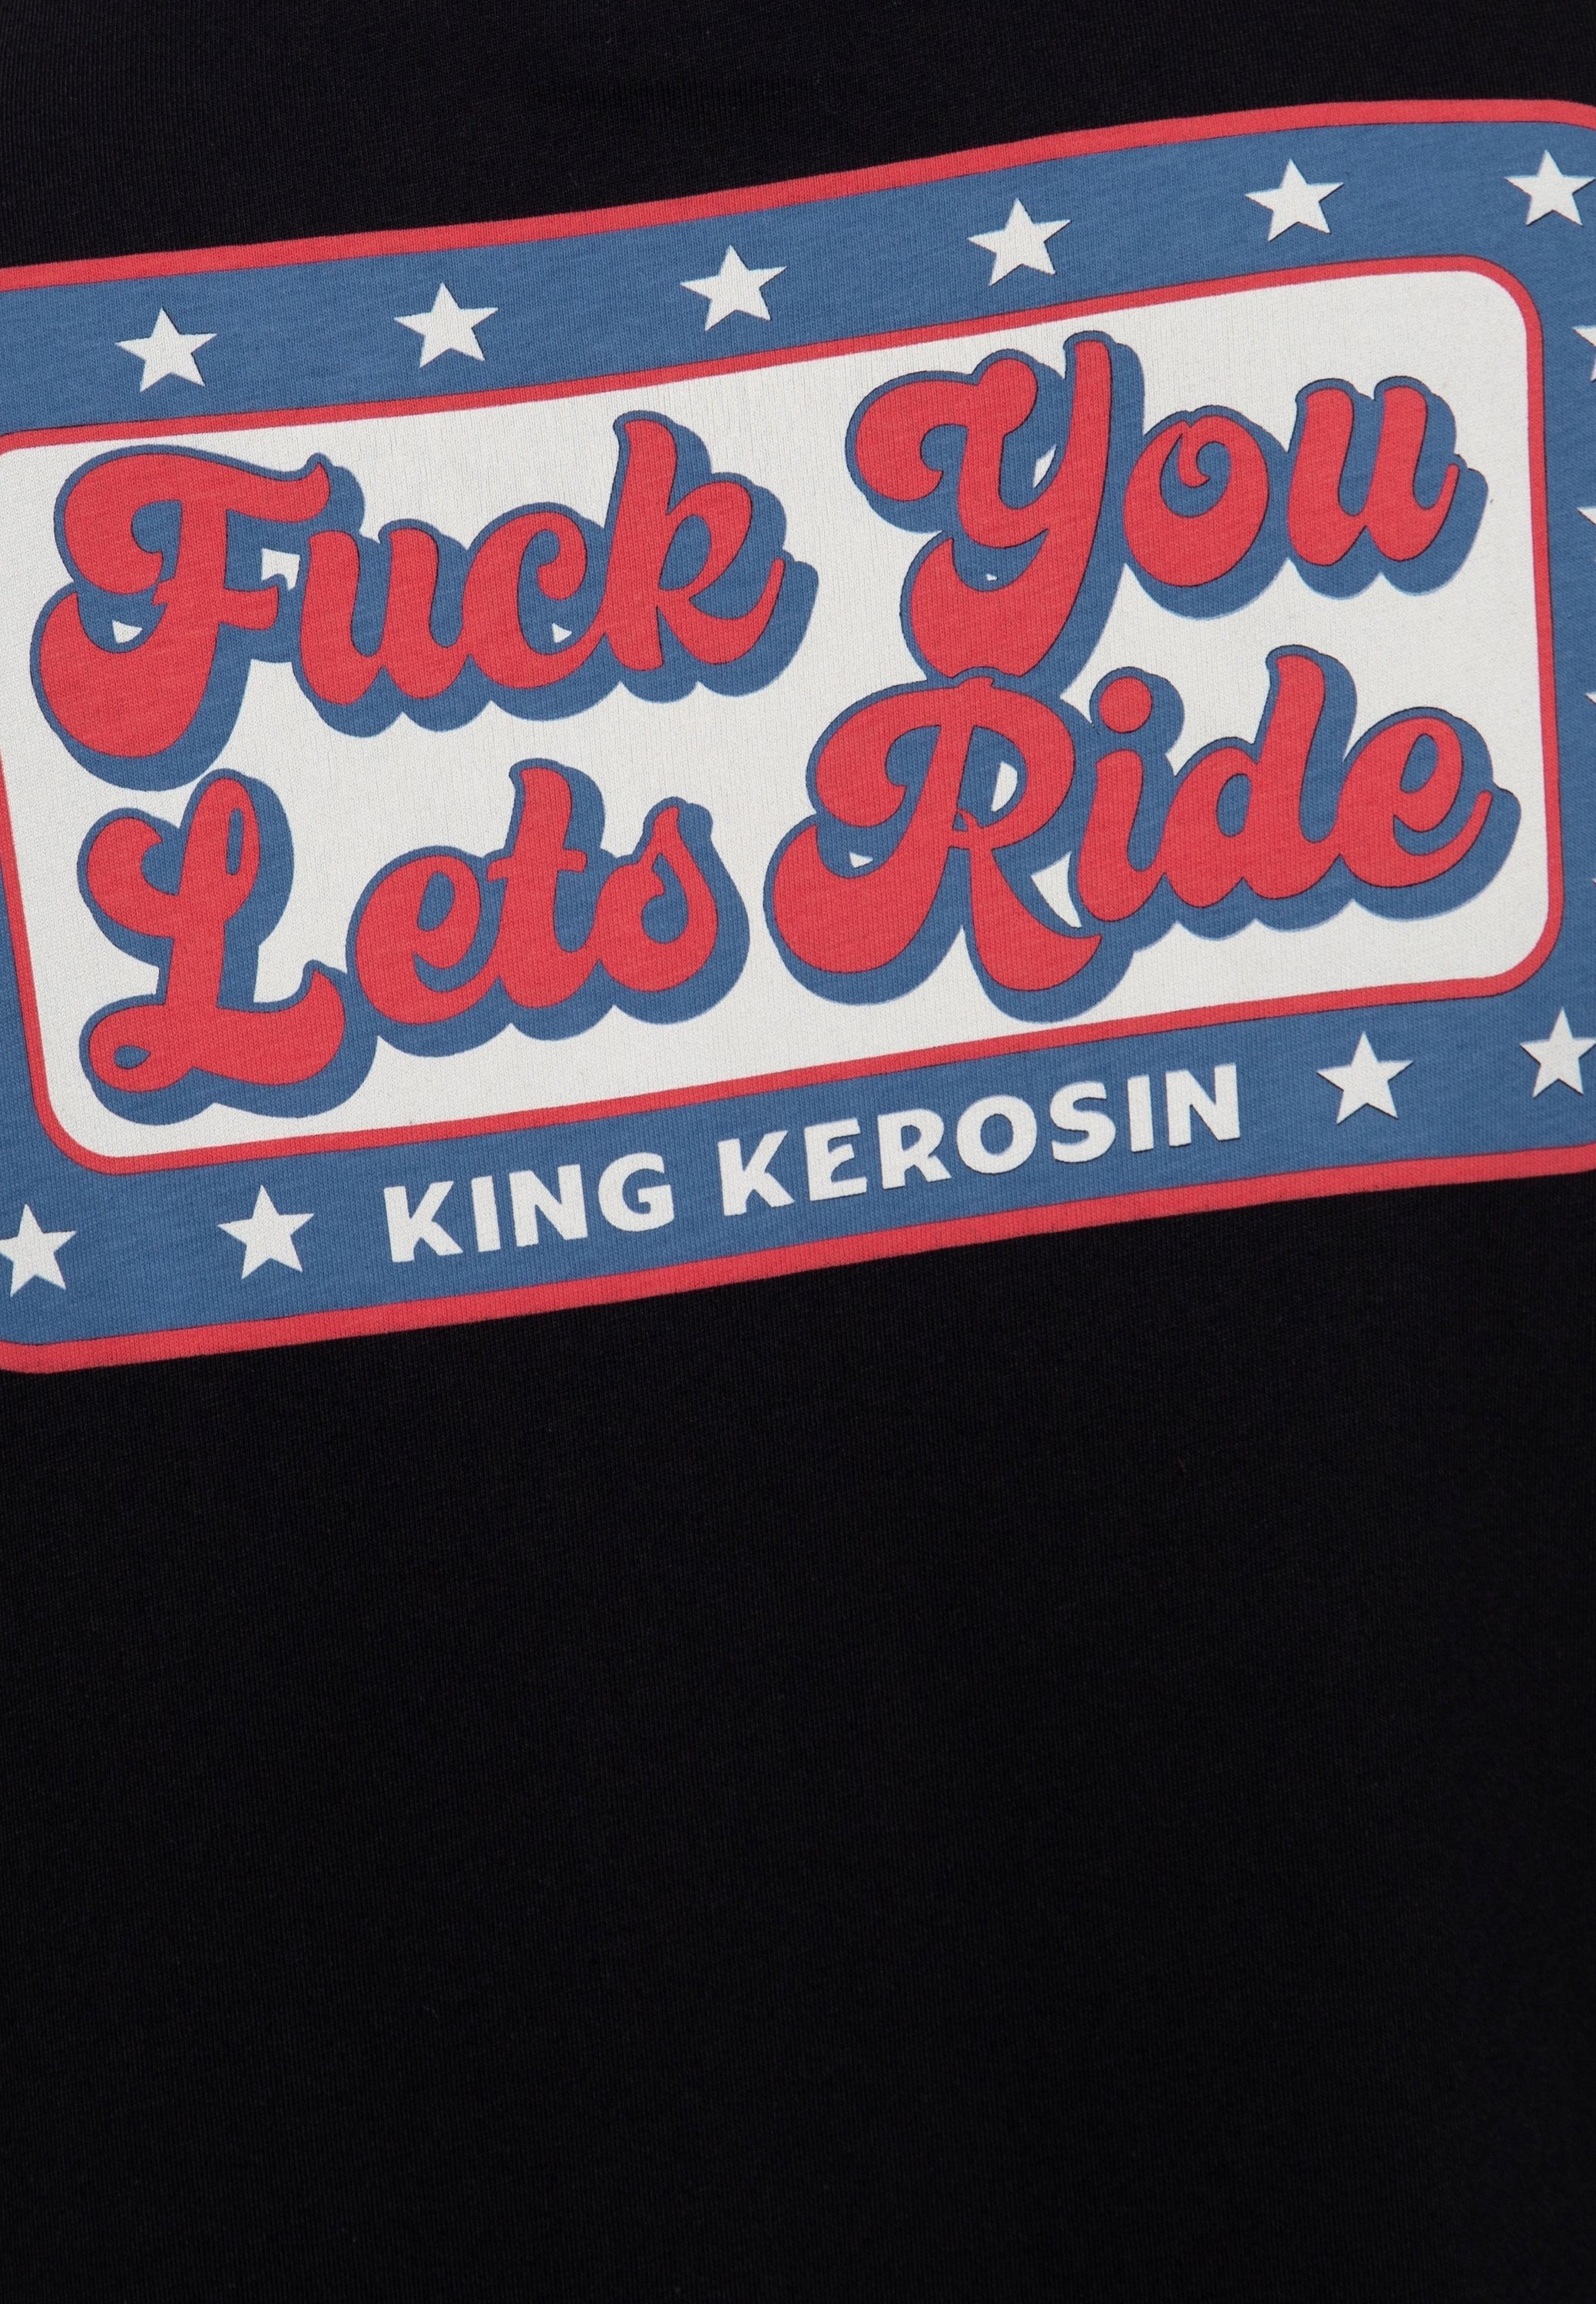 Retro Ride Die or KingKerosin Design Style mit Print-Shirt (1-tlg)